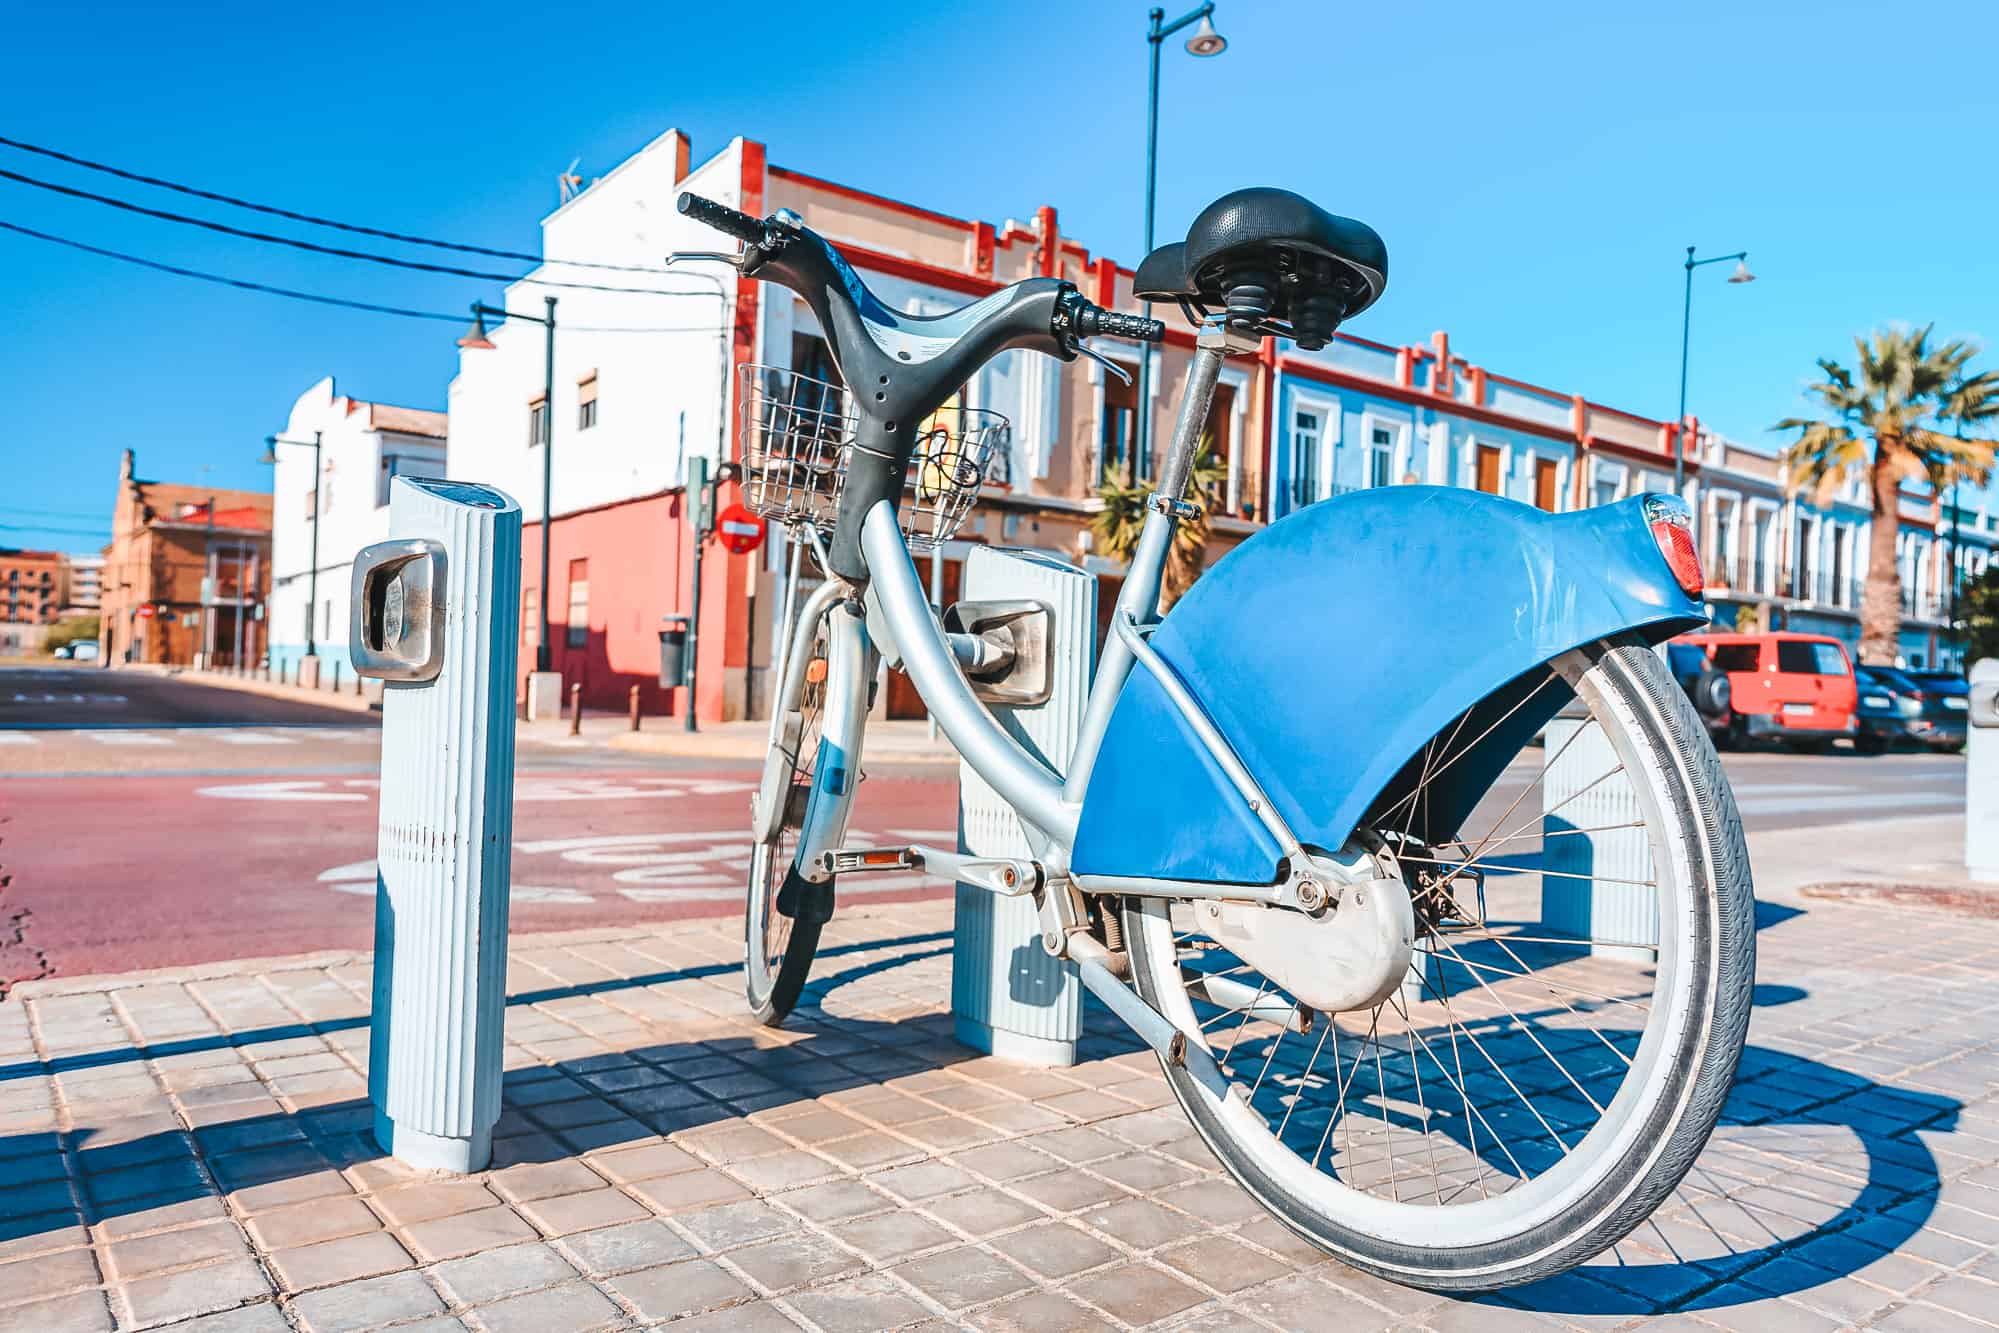 Bicycles for rent on Playa de las Arenas beach in Valencia, Spain